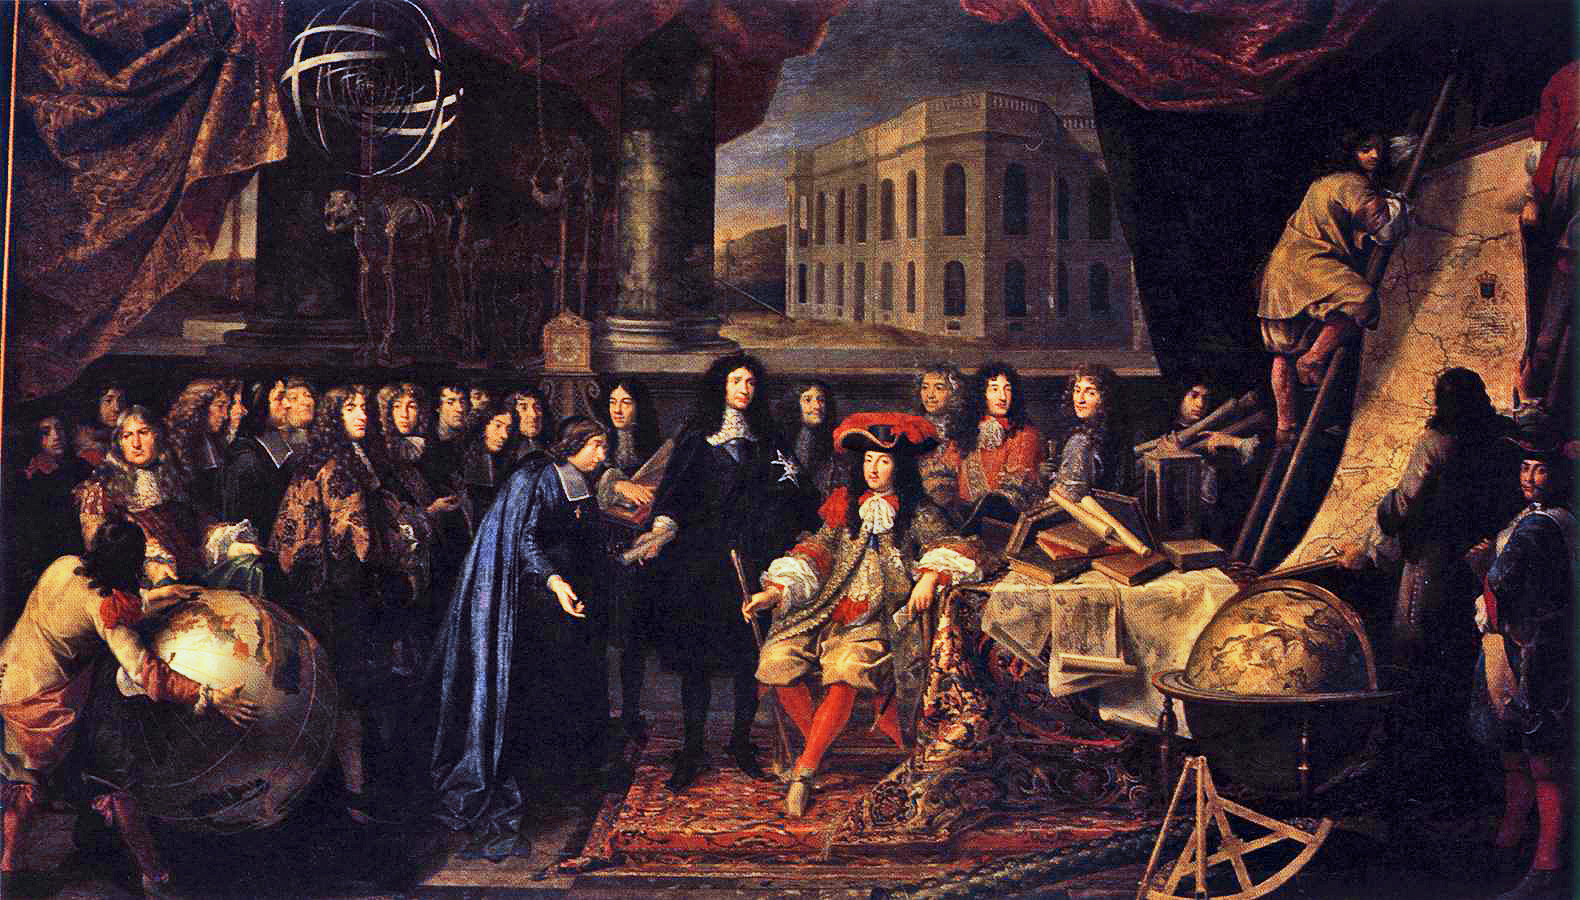 Testelin%2C_Henri_-_Colbert_Presenting_the_Members_of_the_Royal_Academy_of_Sciences_to_Louis_XIV_in_1667.jpg